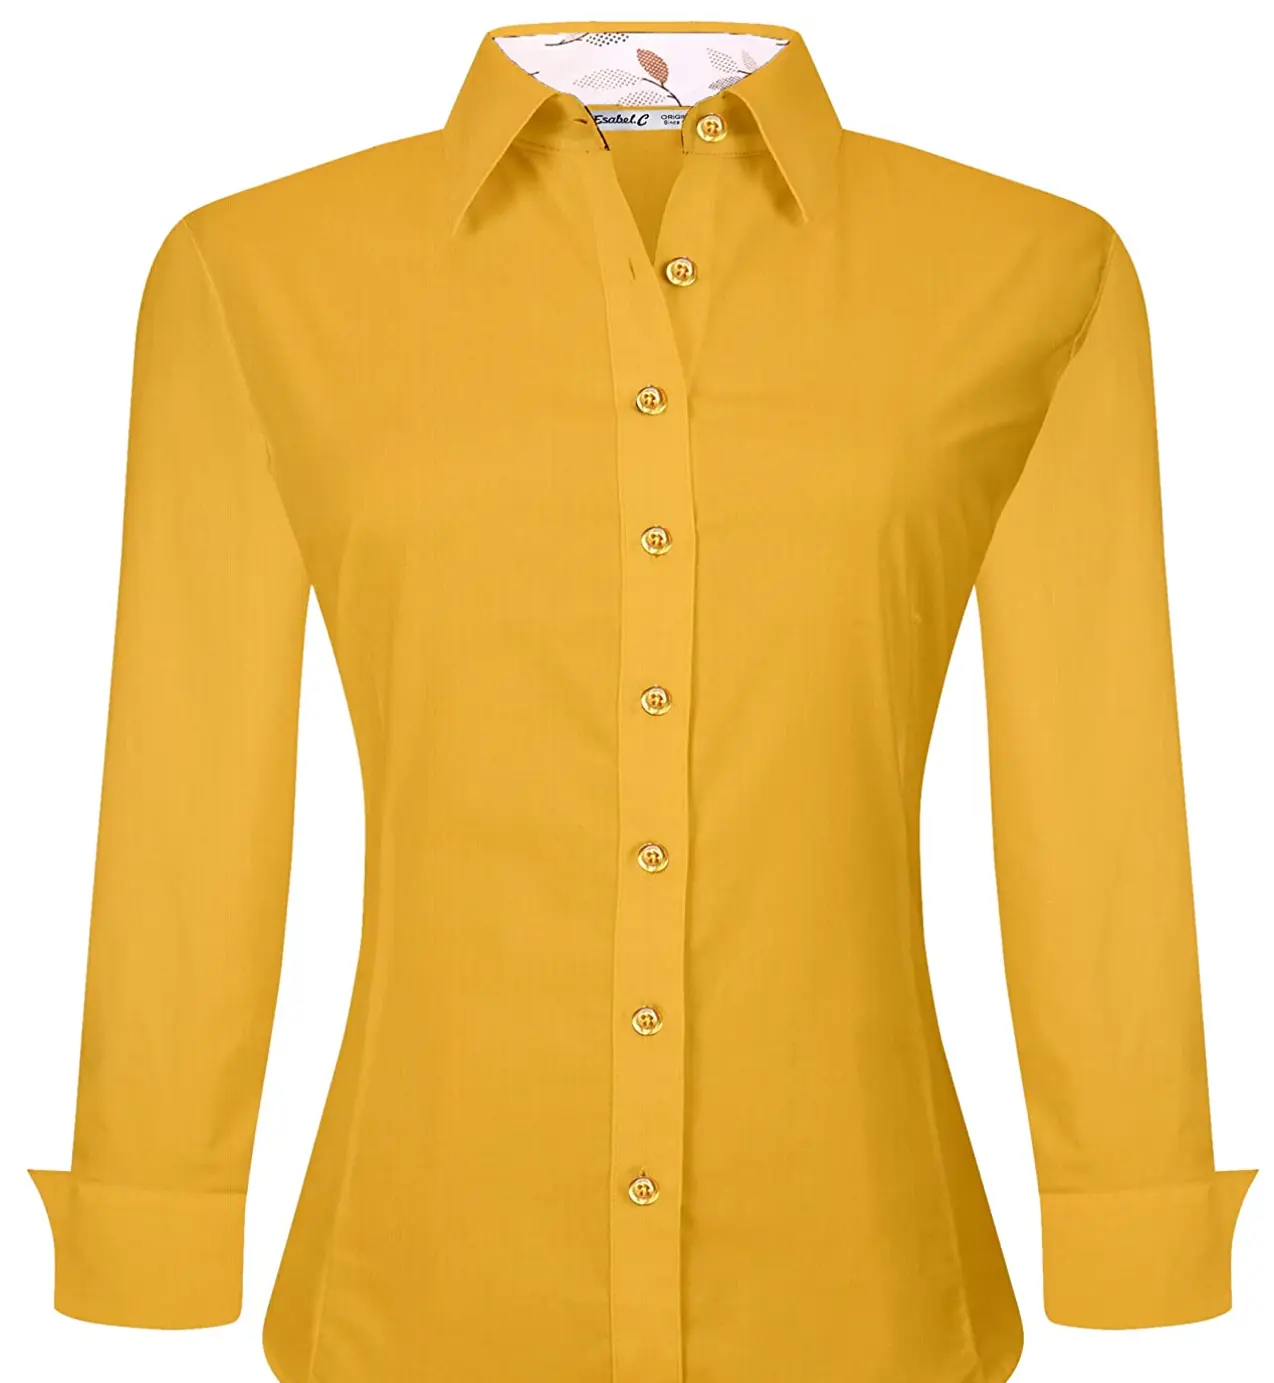 Women Button Down Shirts Long Sleeve Regular Slim Fit Cotton Stretch Work Blouse